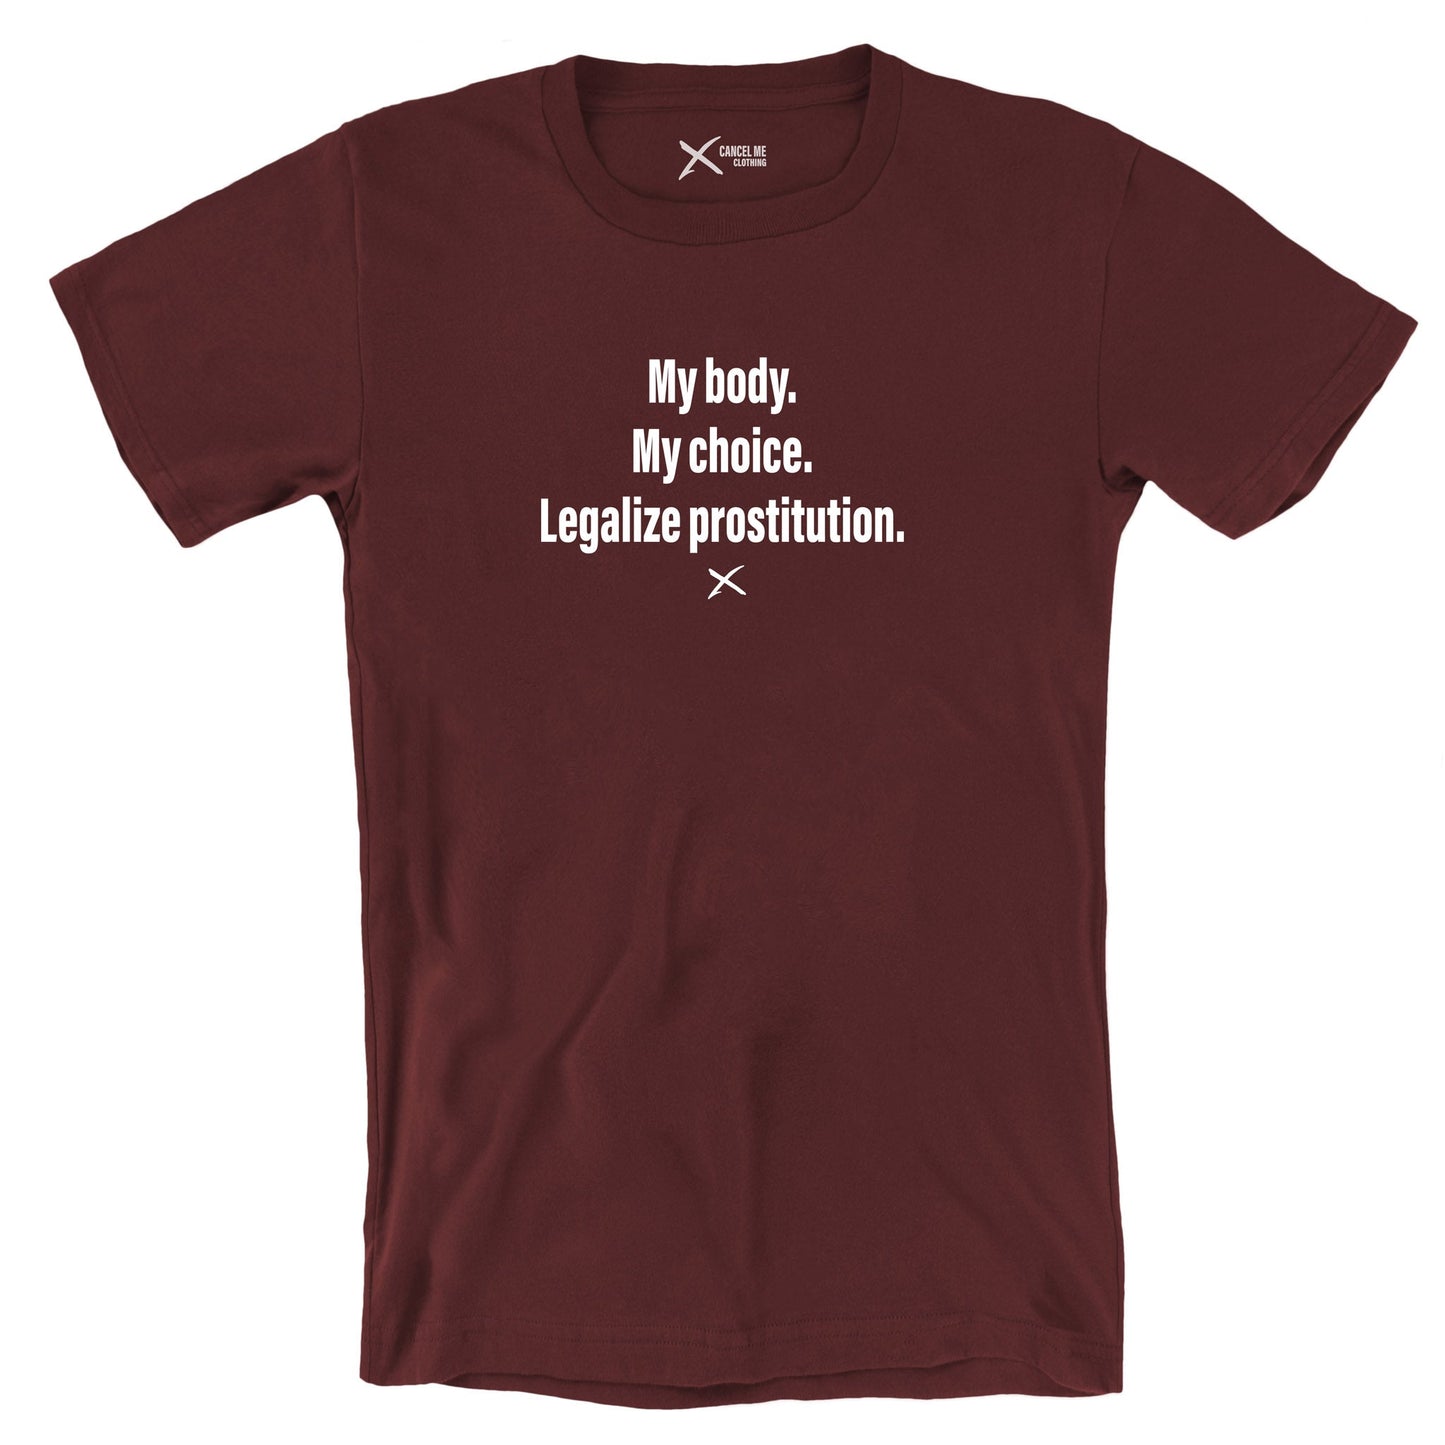 My body. My choice. Legalize prostitution. - Shirt